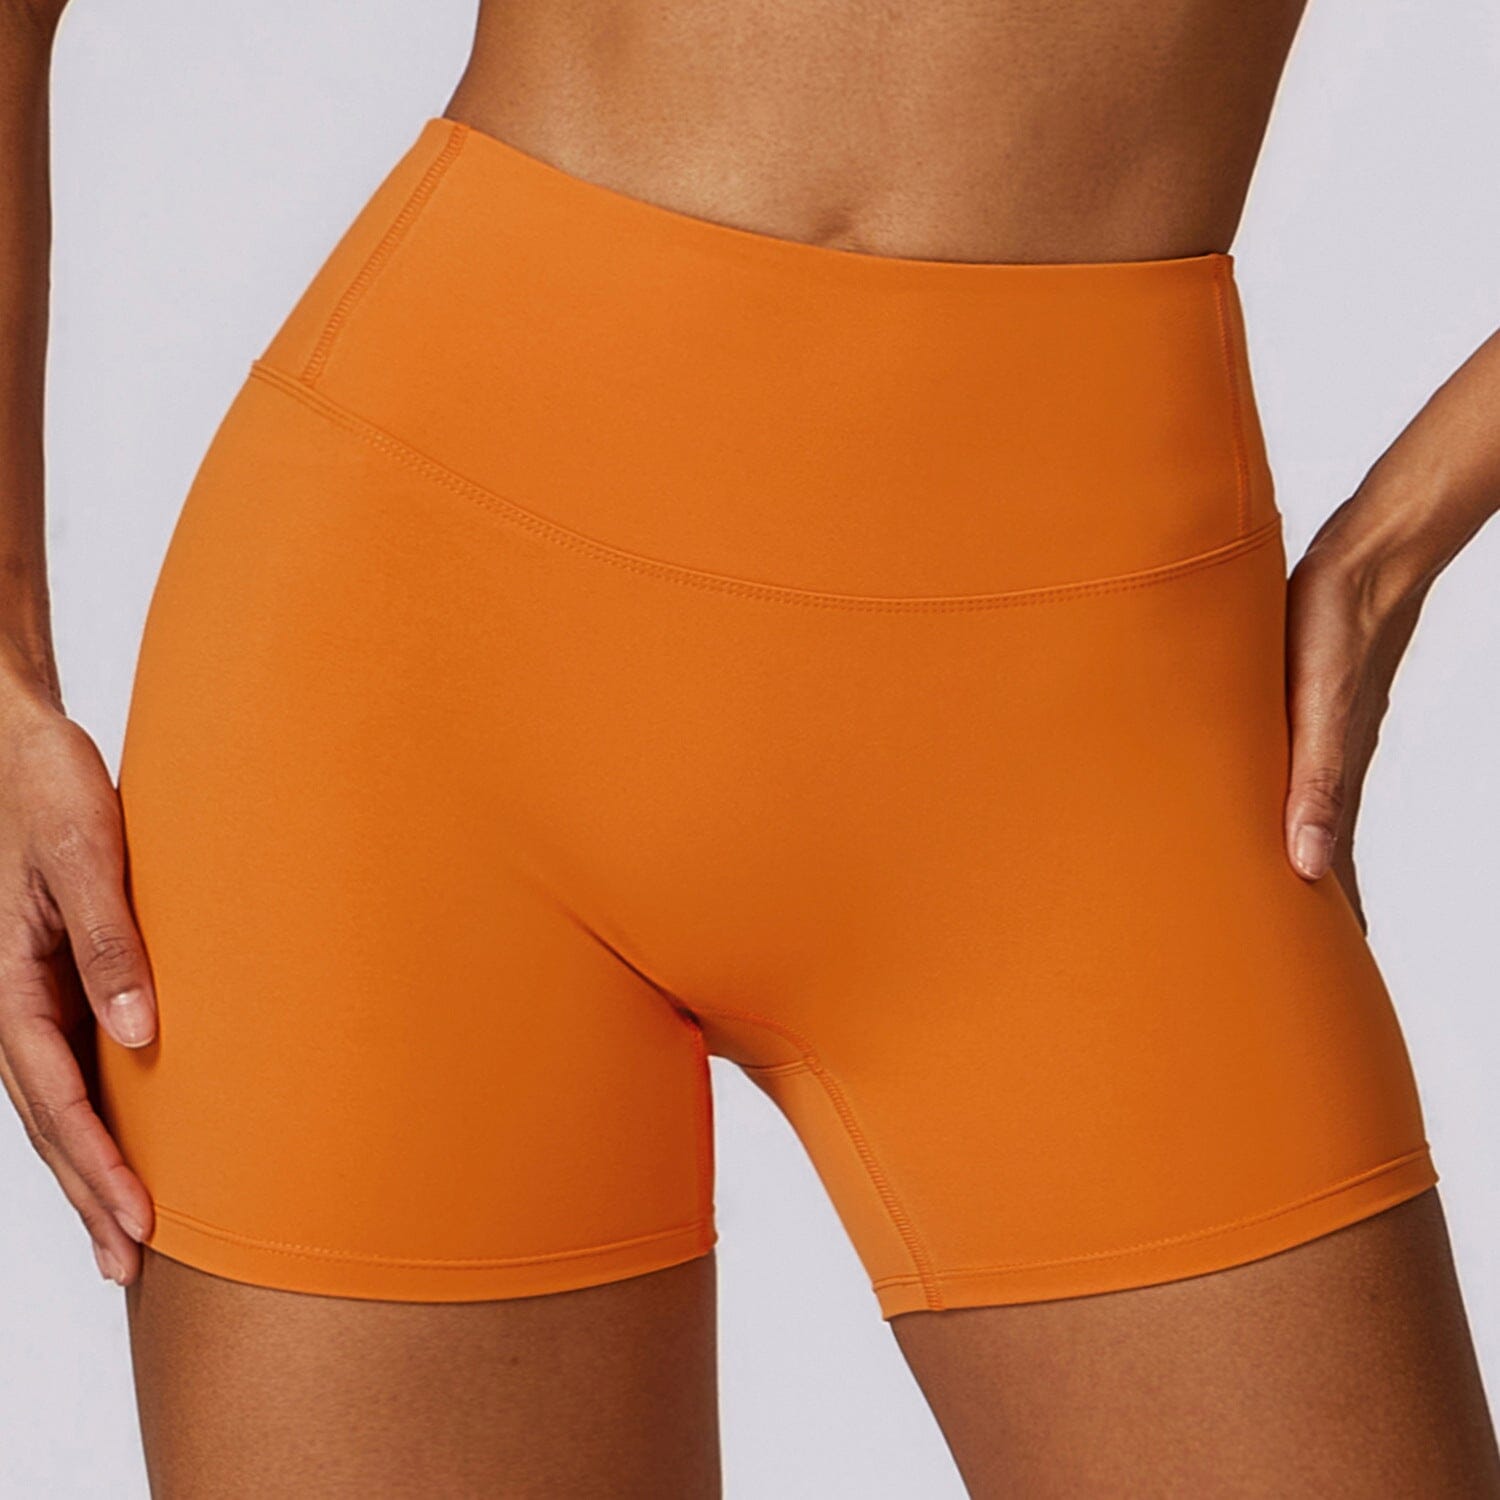 Movers Scrunch Shorts Shorts Starlethics Orange S 